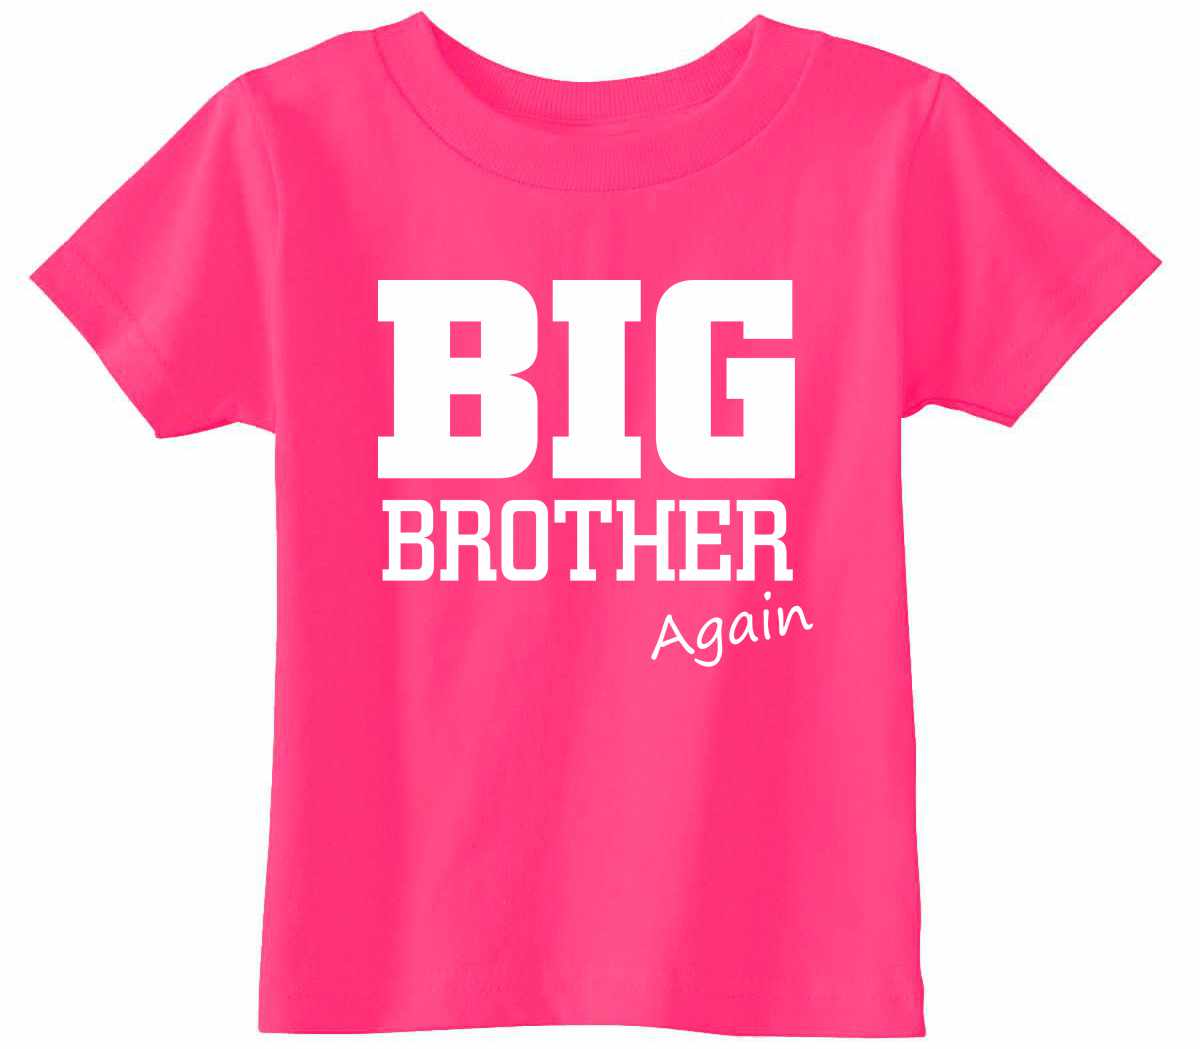 Big Brother - Again Infant/Toddler  (#1104-7)